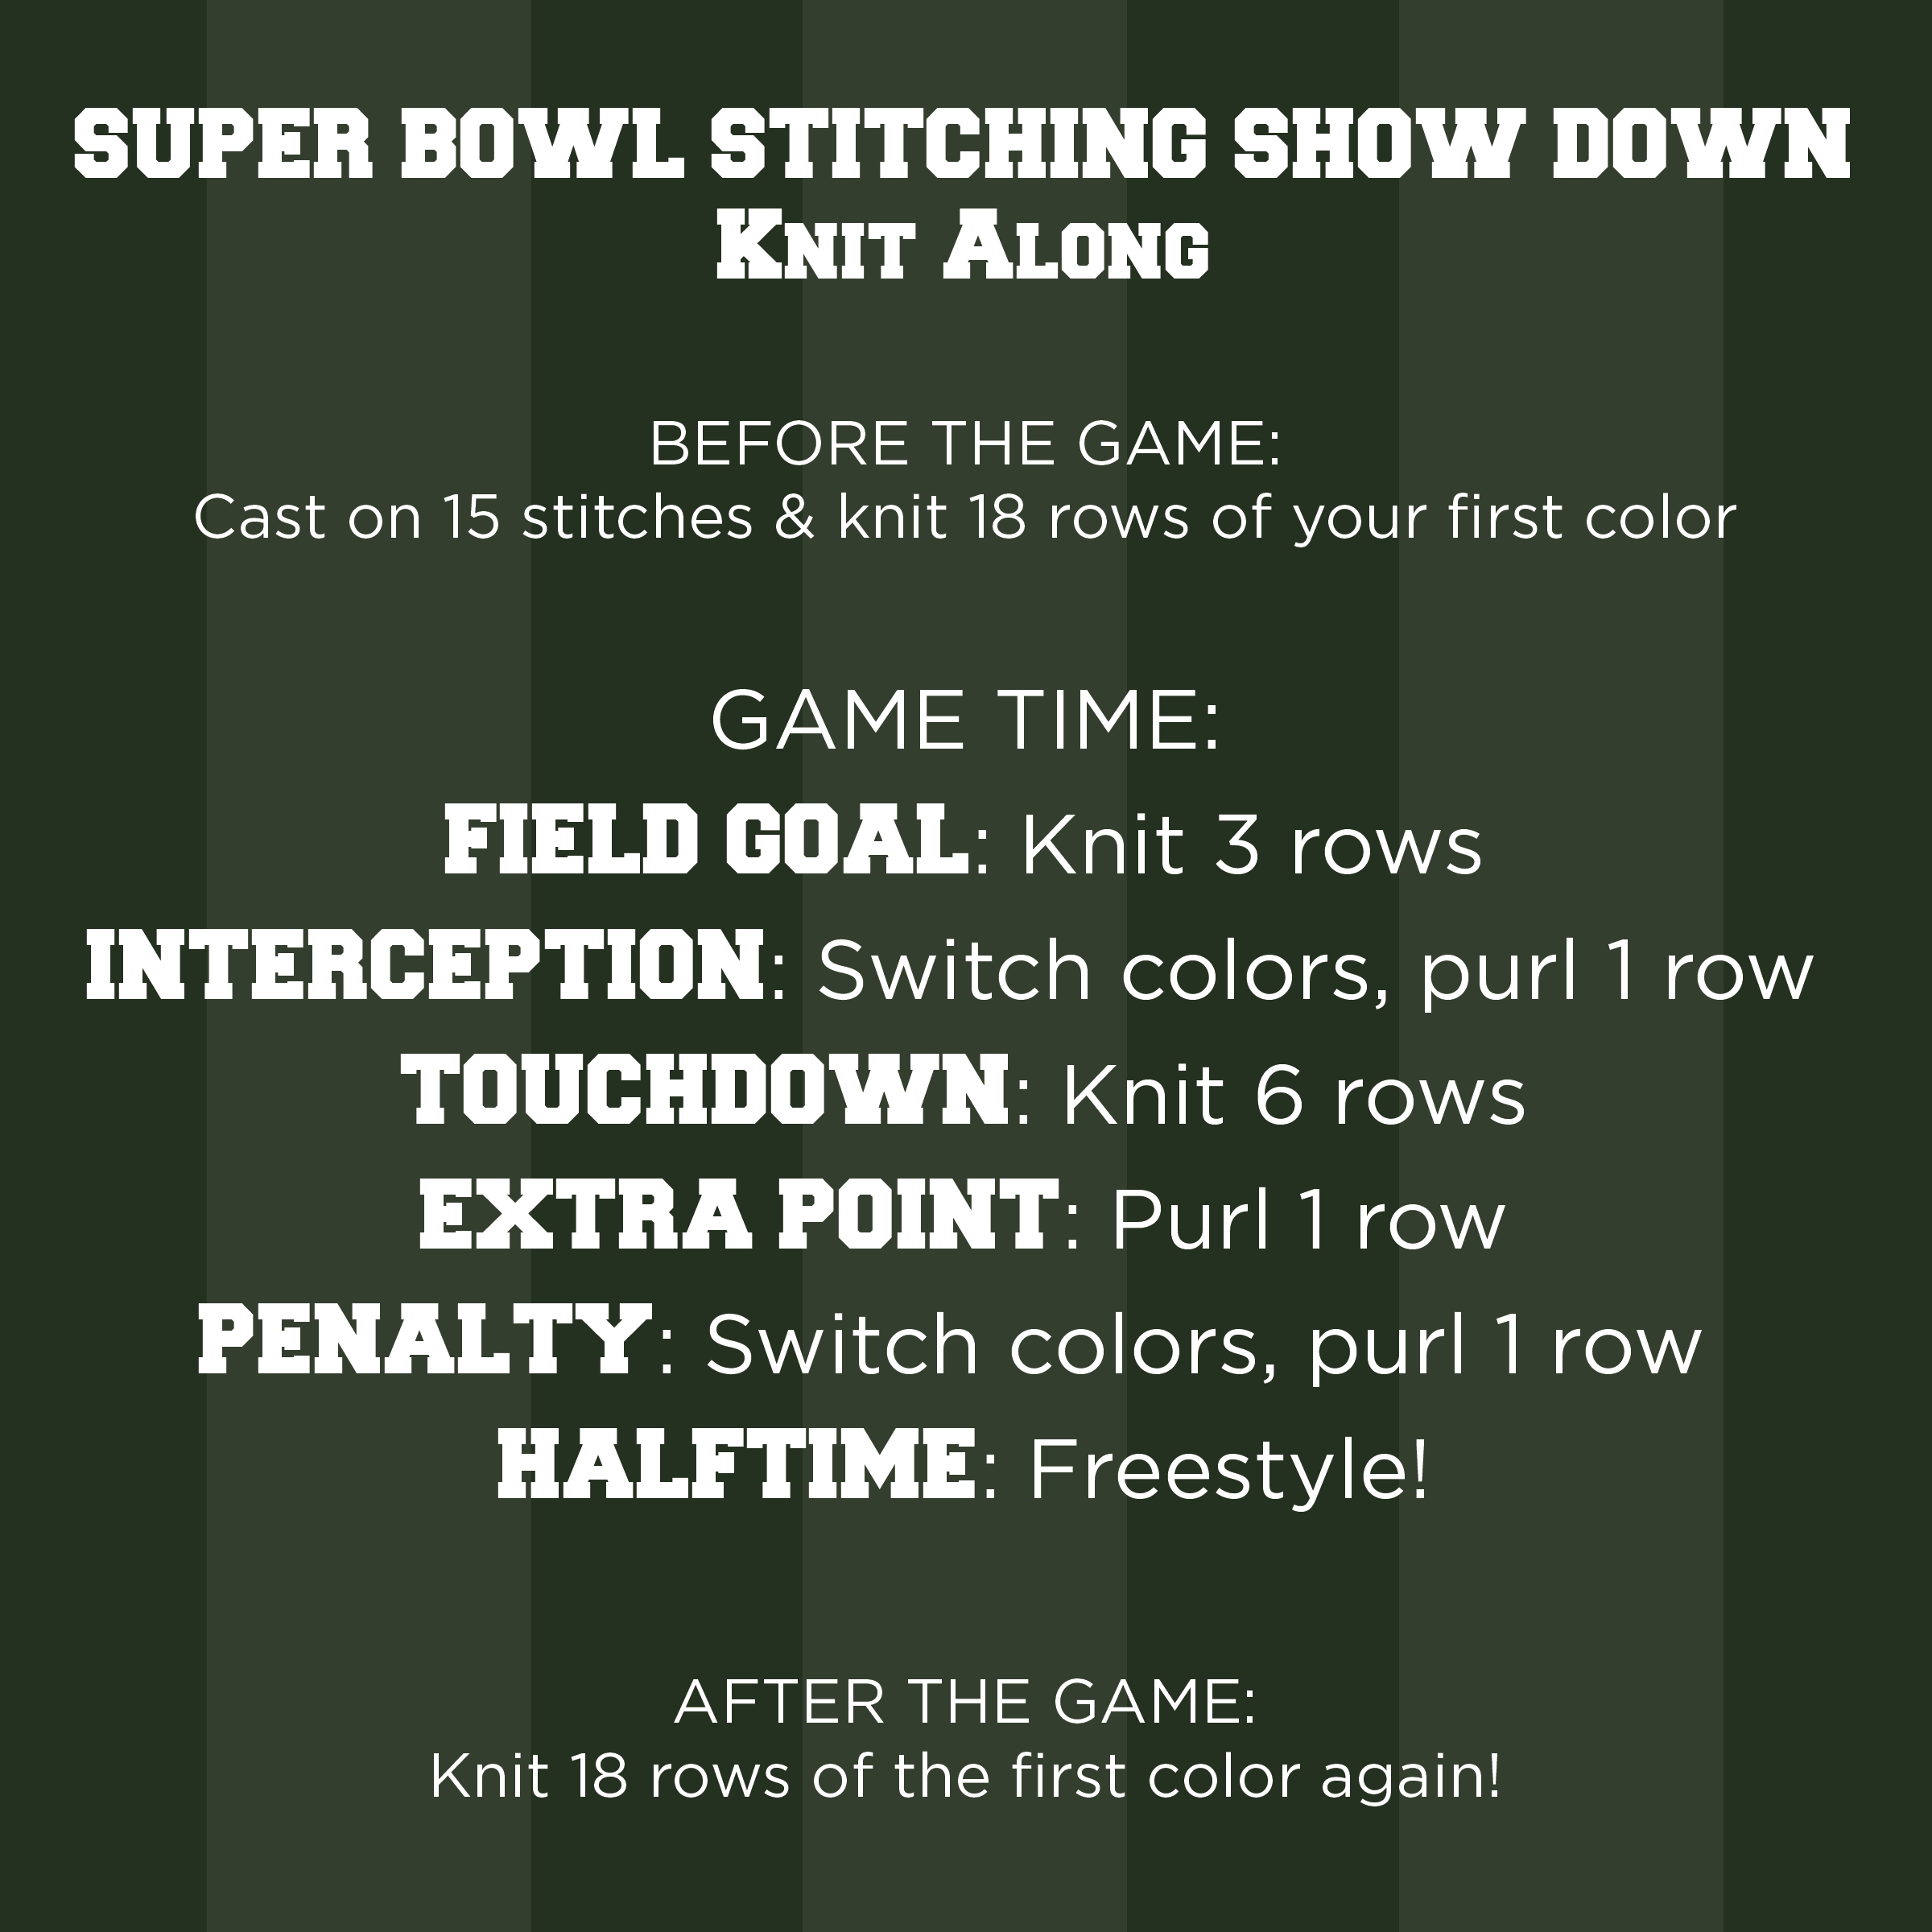 Super Bowl Stitching Show Down Knit Along